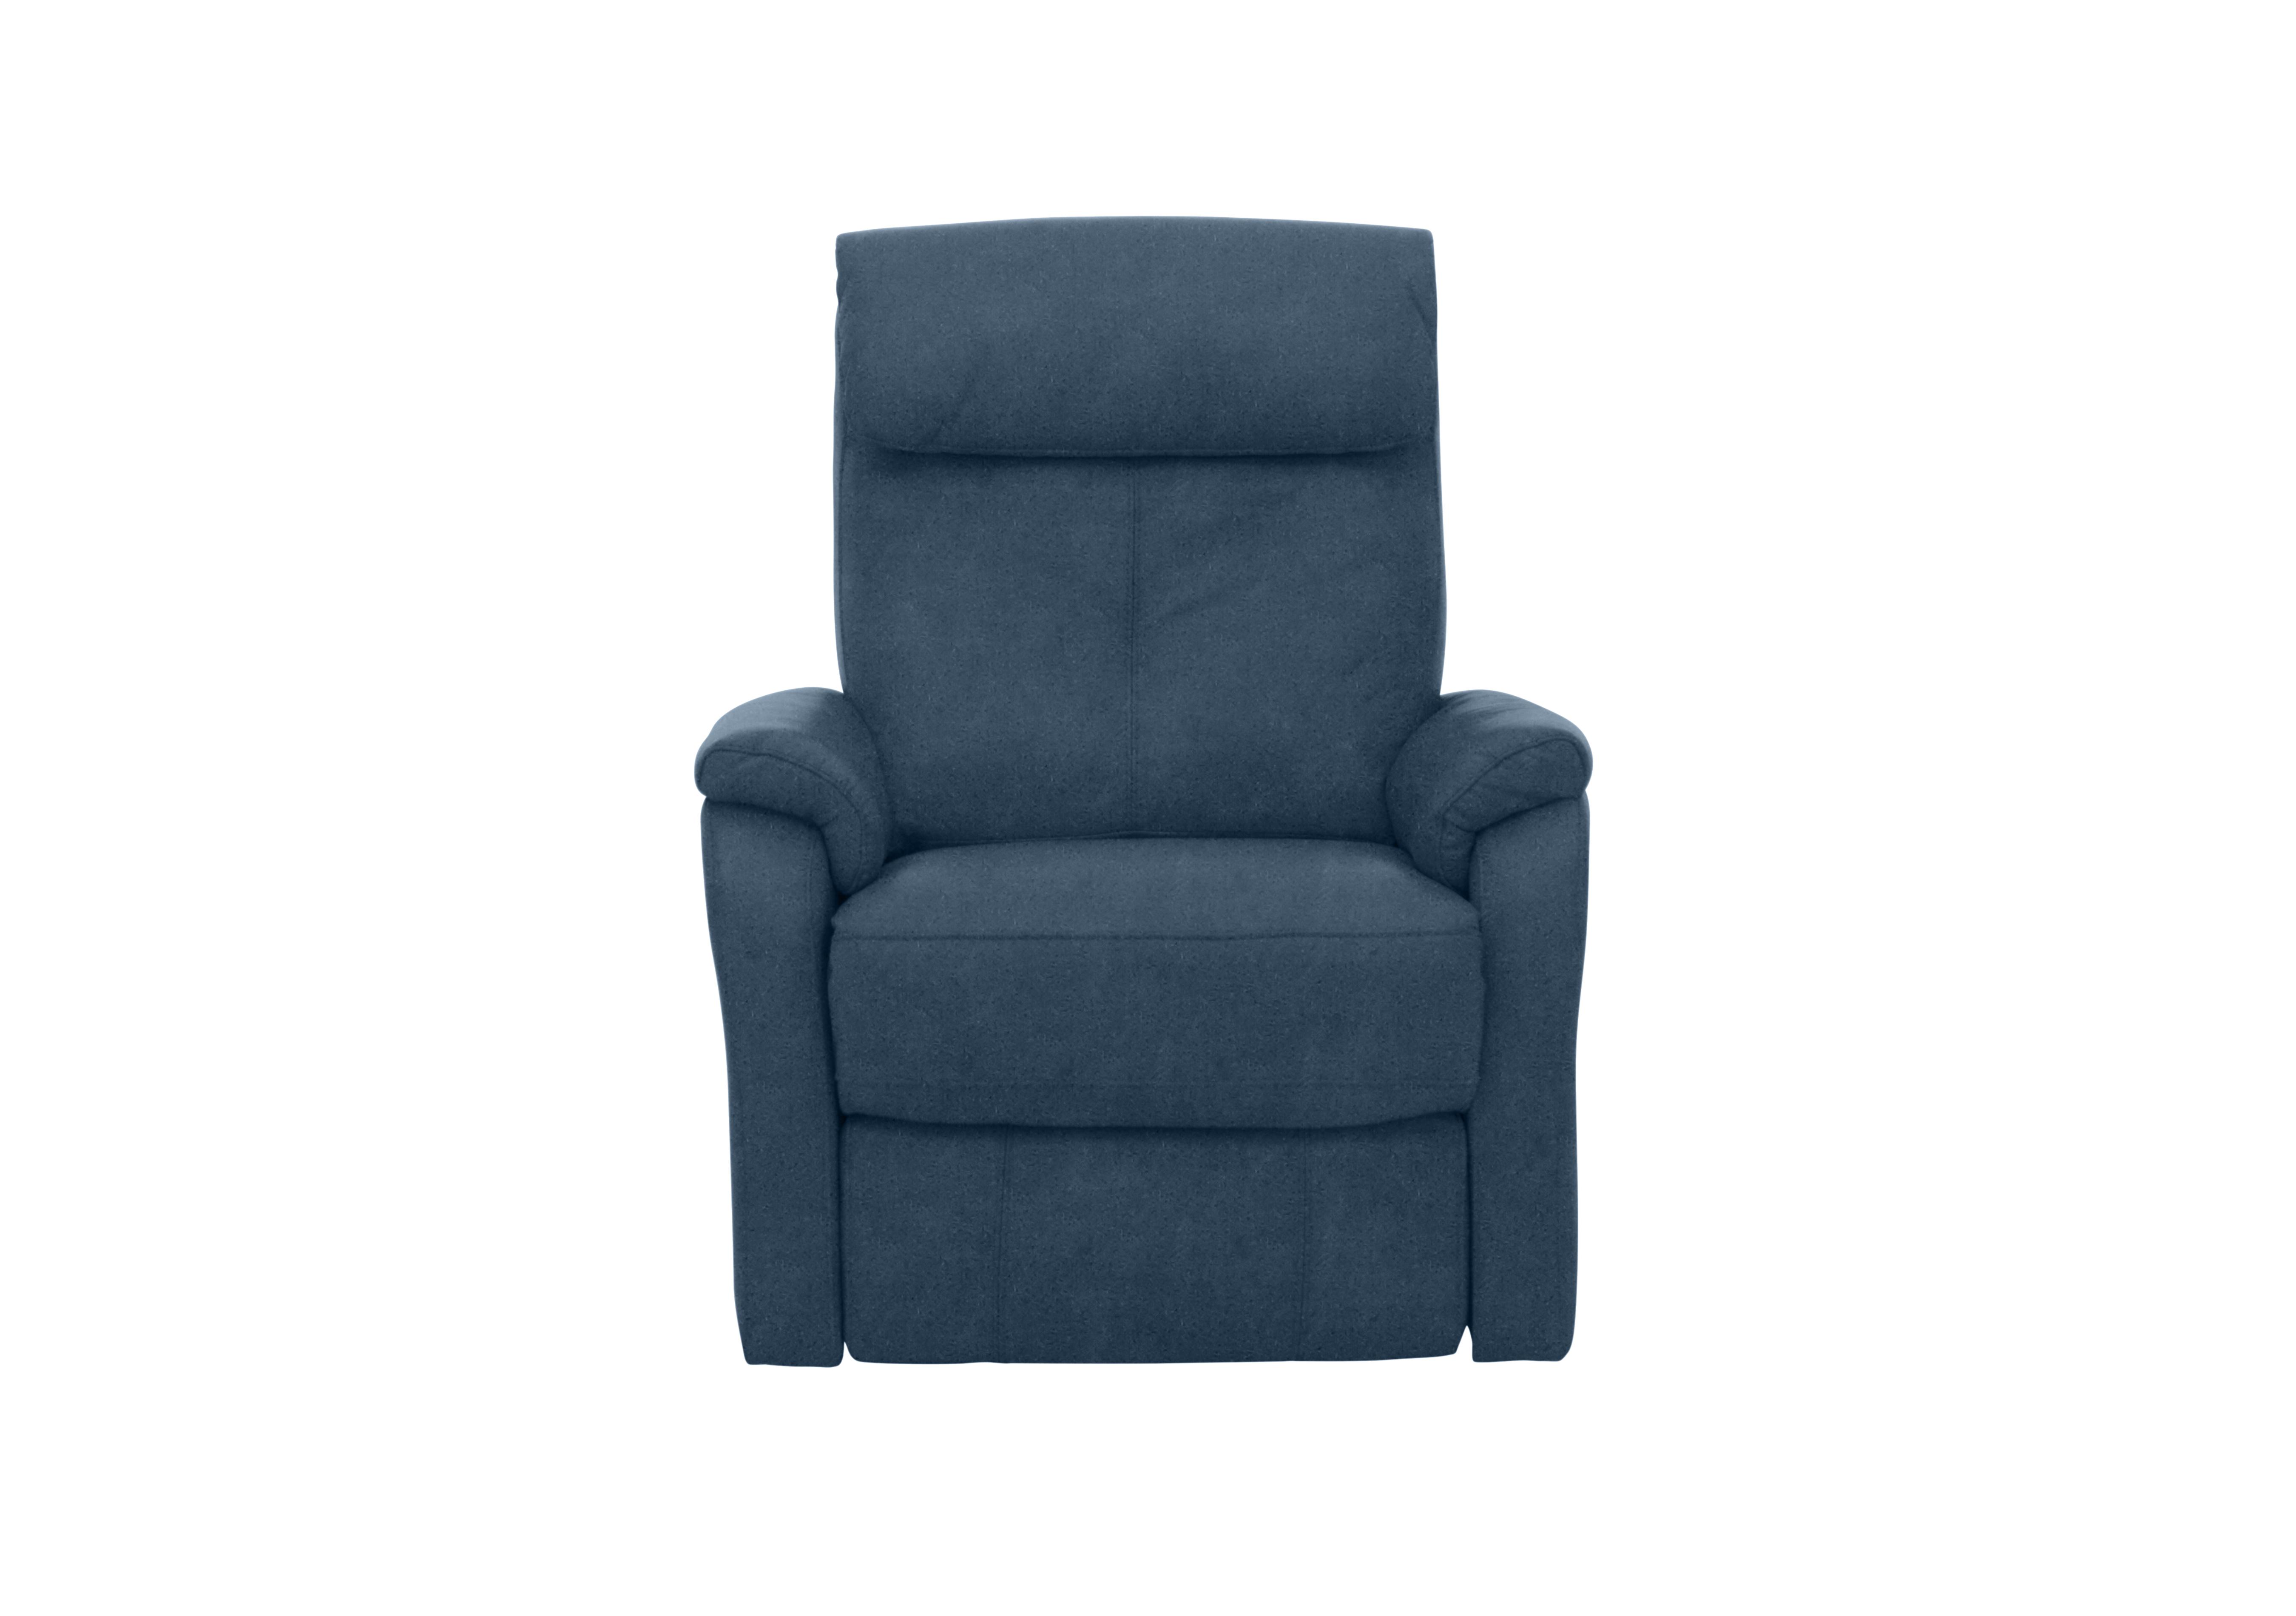 Rowan Fabric Swivel Rocker Recliner Armchair in Bfa-Blj-R10 Blue on Furniture Village